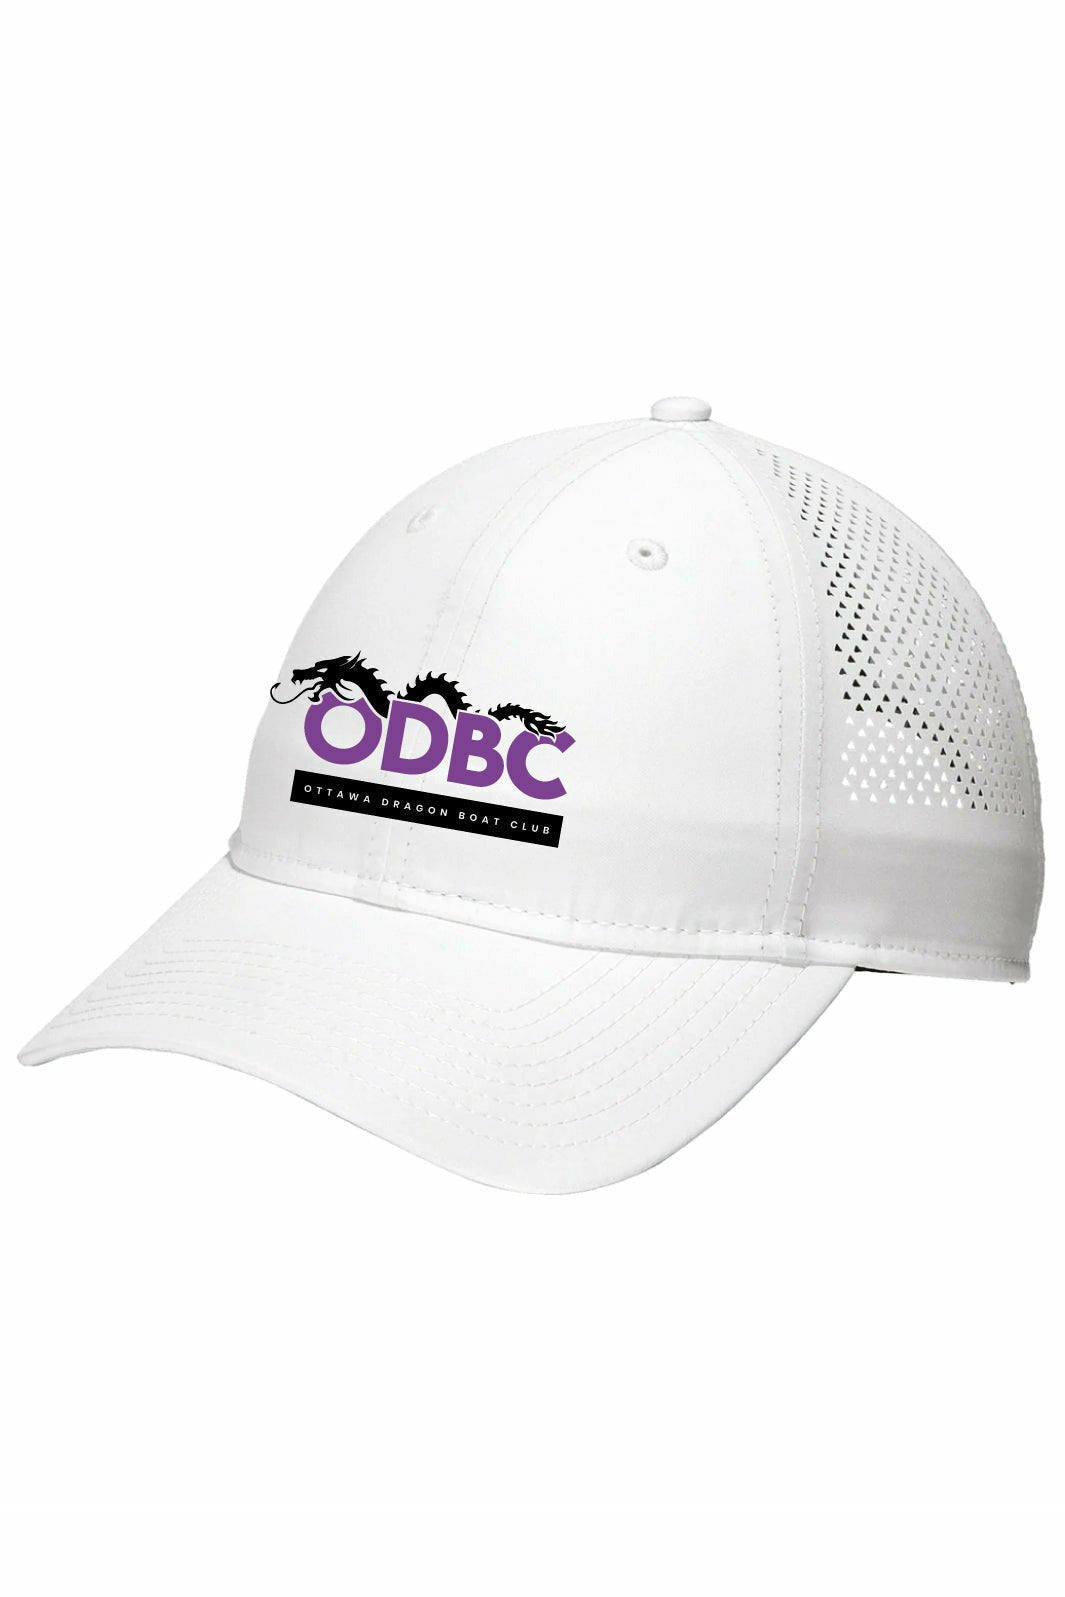 ODBC Perforated Performance Cap (Dracona) - Oddball Workshop